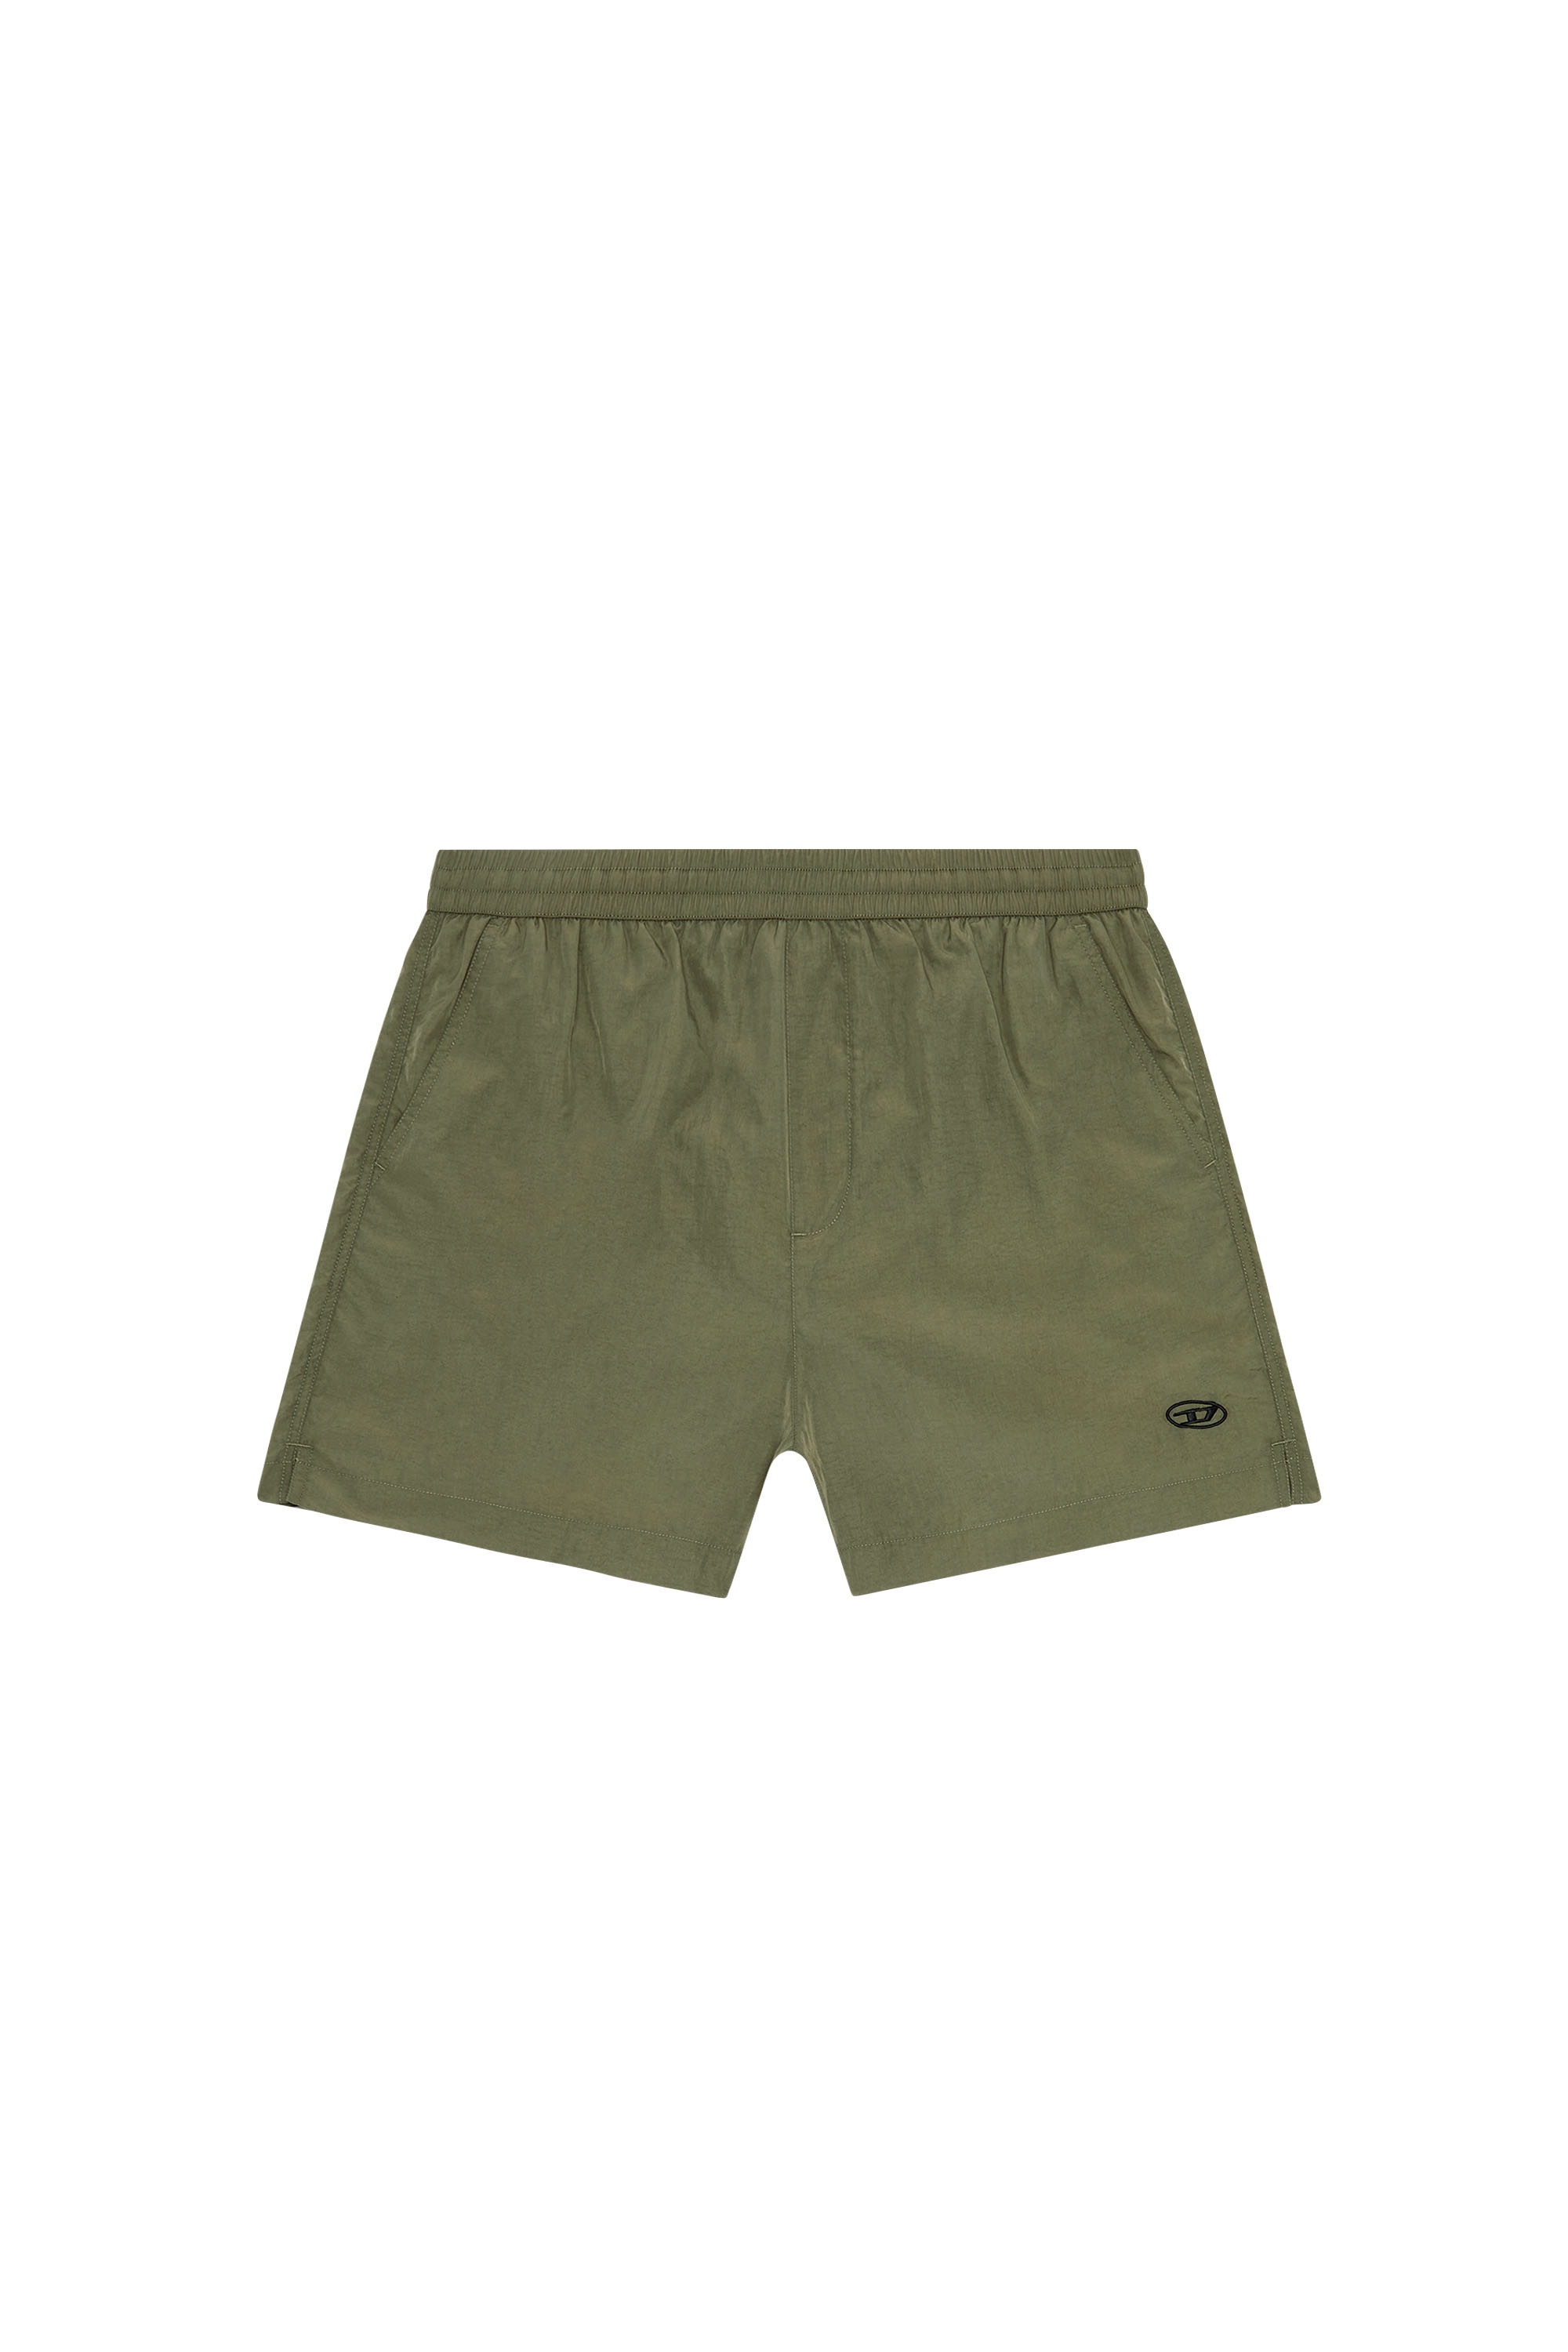 Diesel - BMBX-RIO-41CM-PARACHUTE, Man Nylon board shorts in Green - Image 4